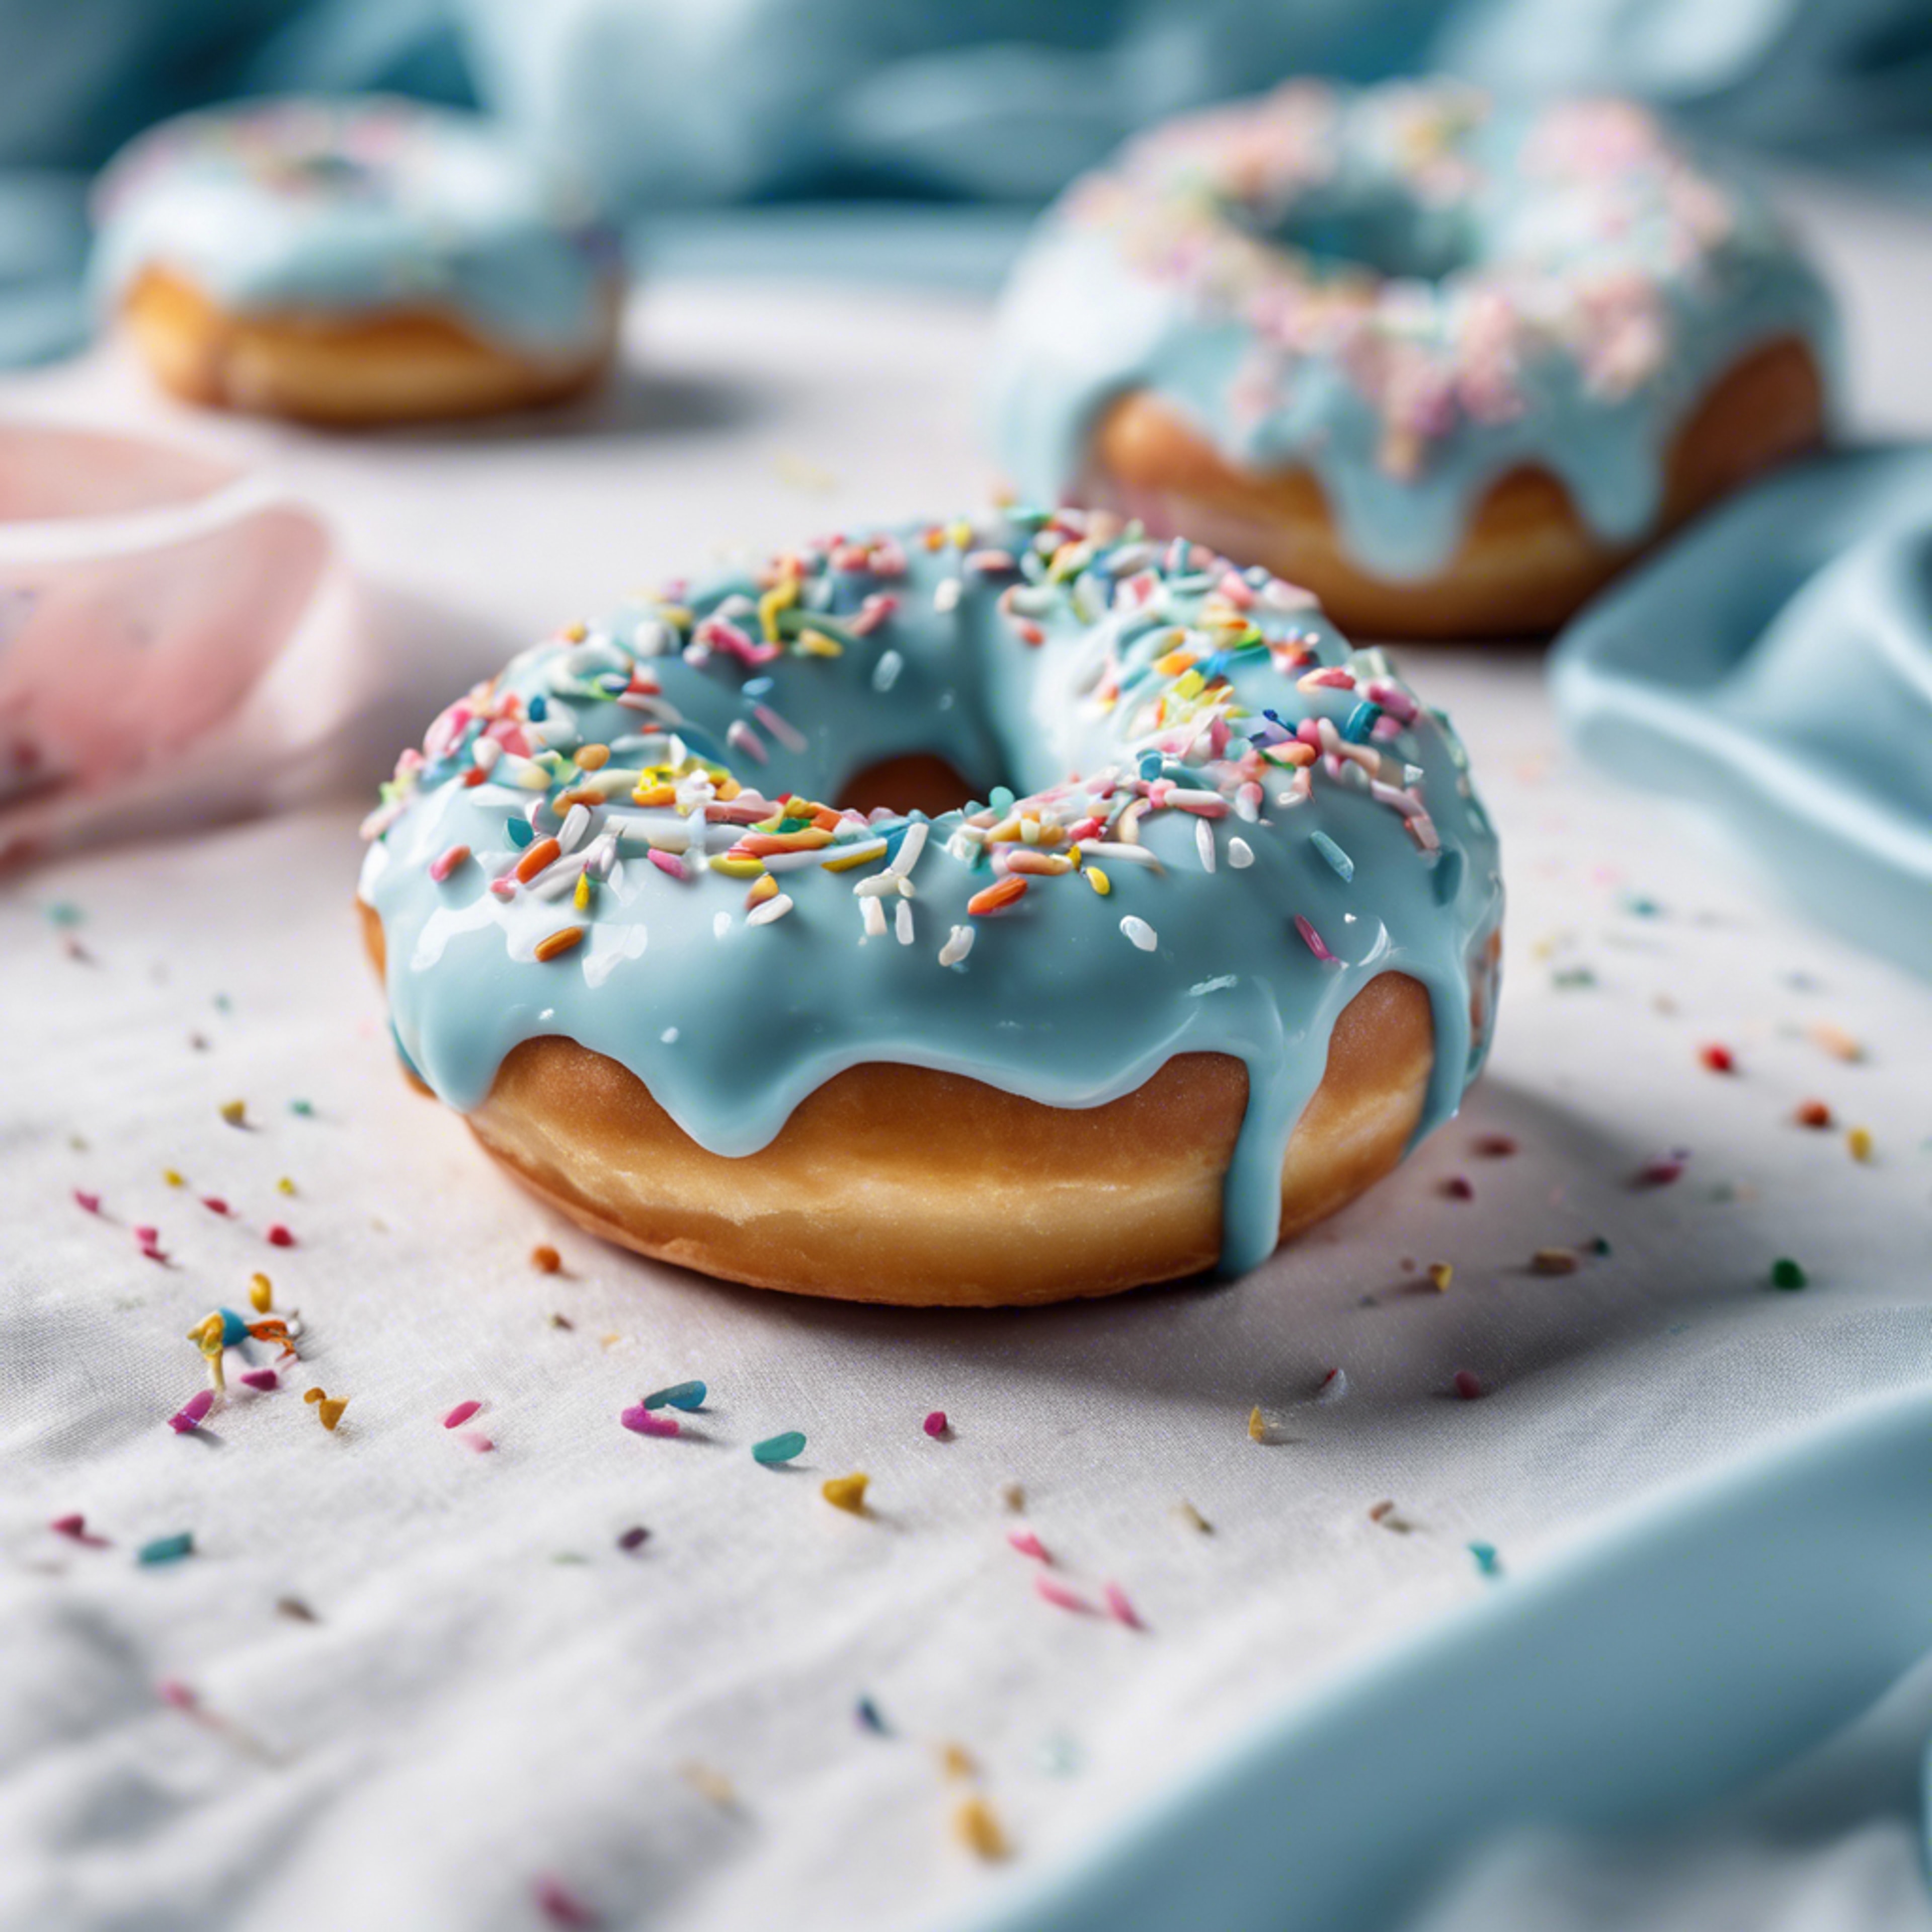 A pastel blue iced doughnut with sprinkles on a white tablecloth.壁紙[39dc4677ba734984abd6]